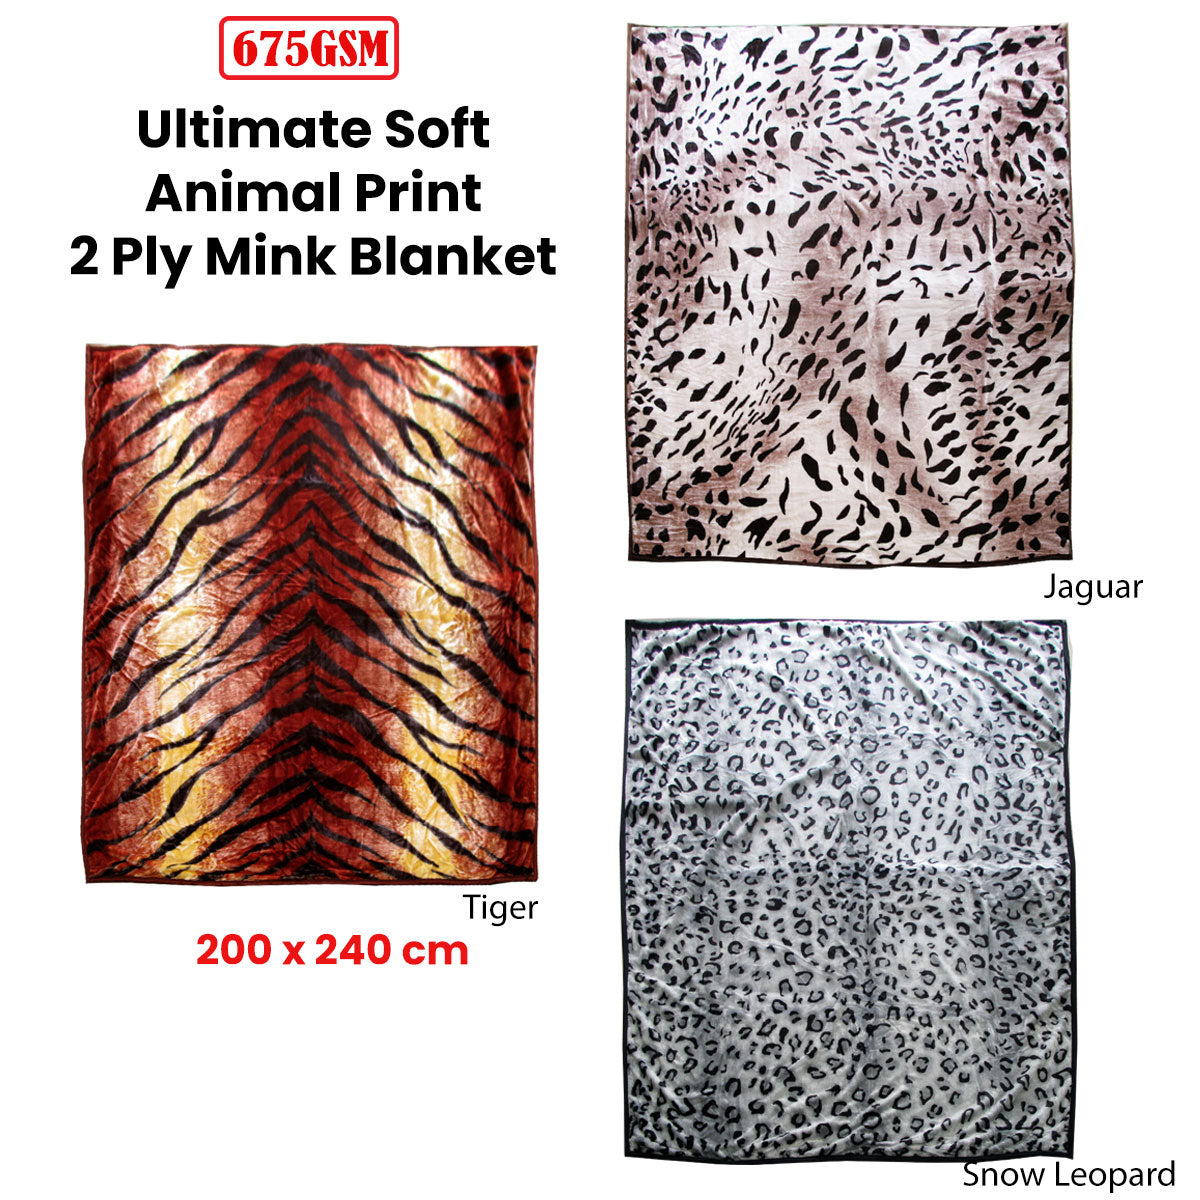 675gsm 2 Ply Animal Print Faux Mink Blanket Queen 200x240 cm Snow Leopard